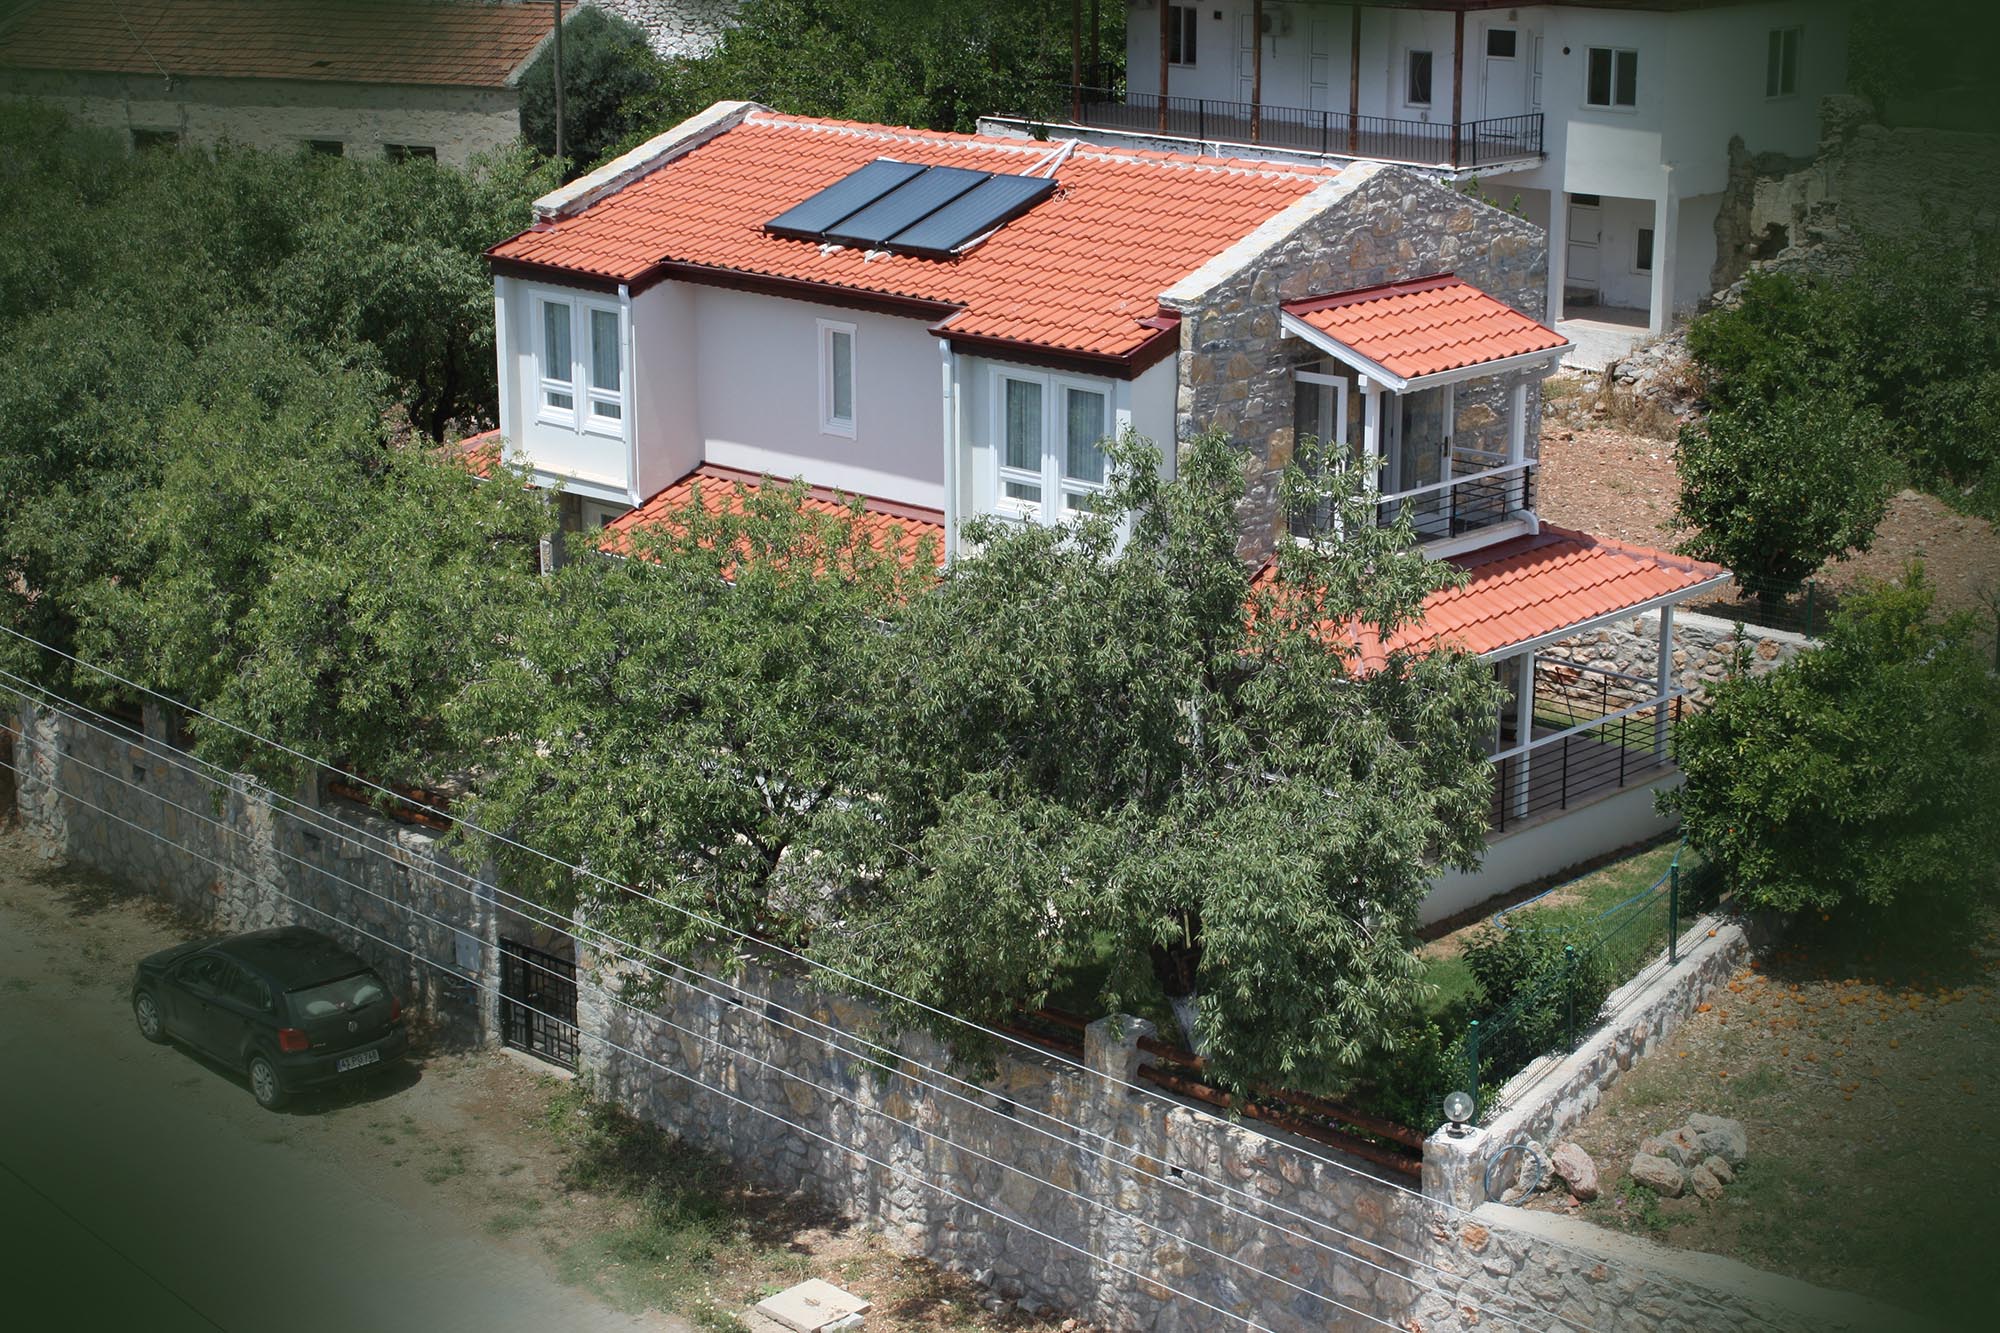 Çetin House